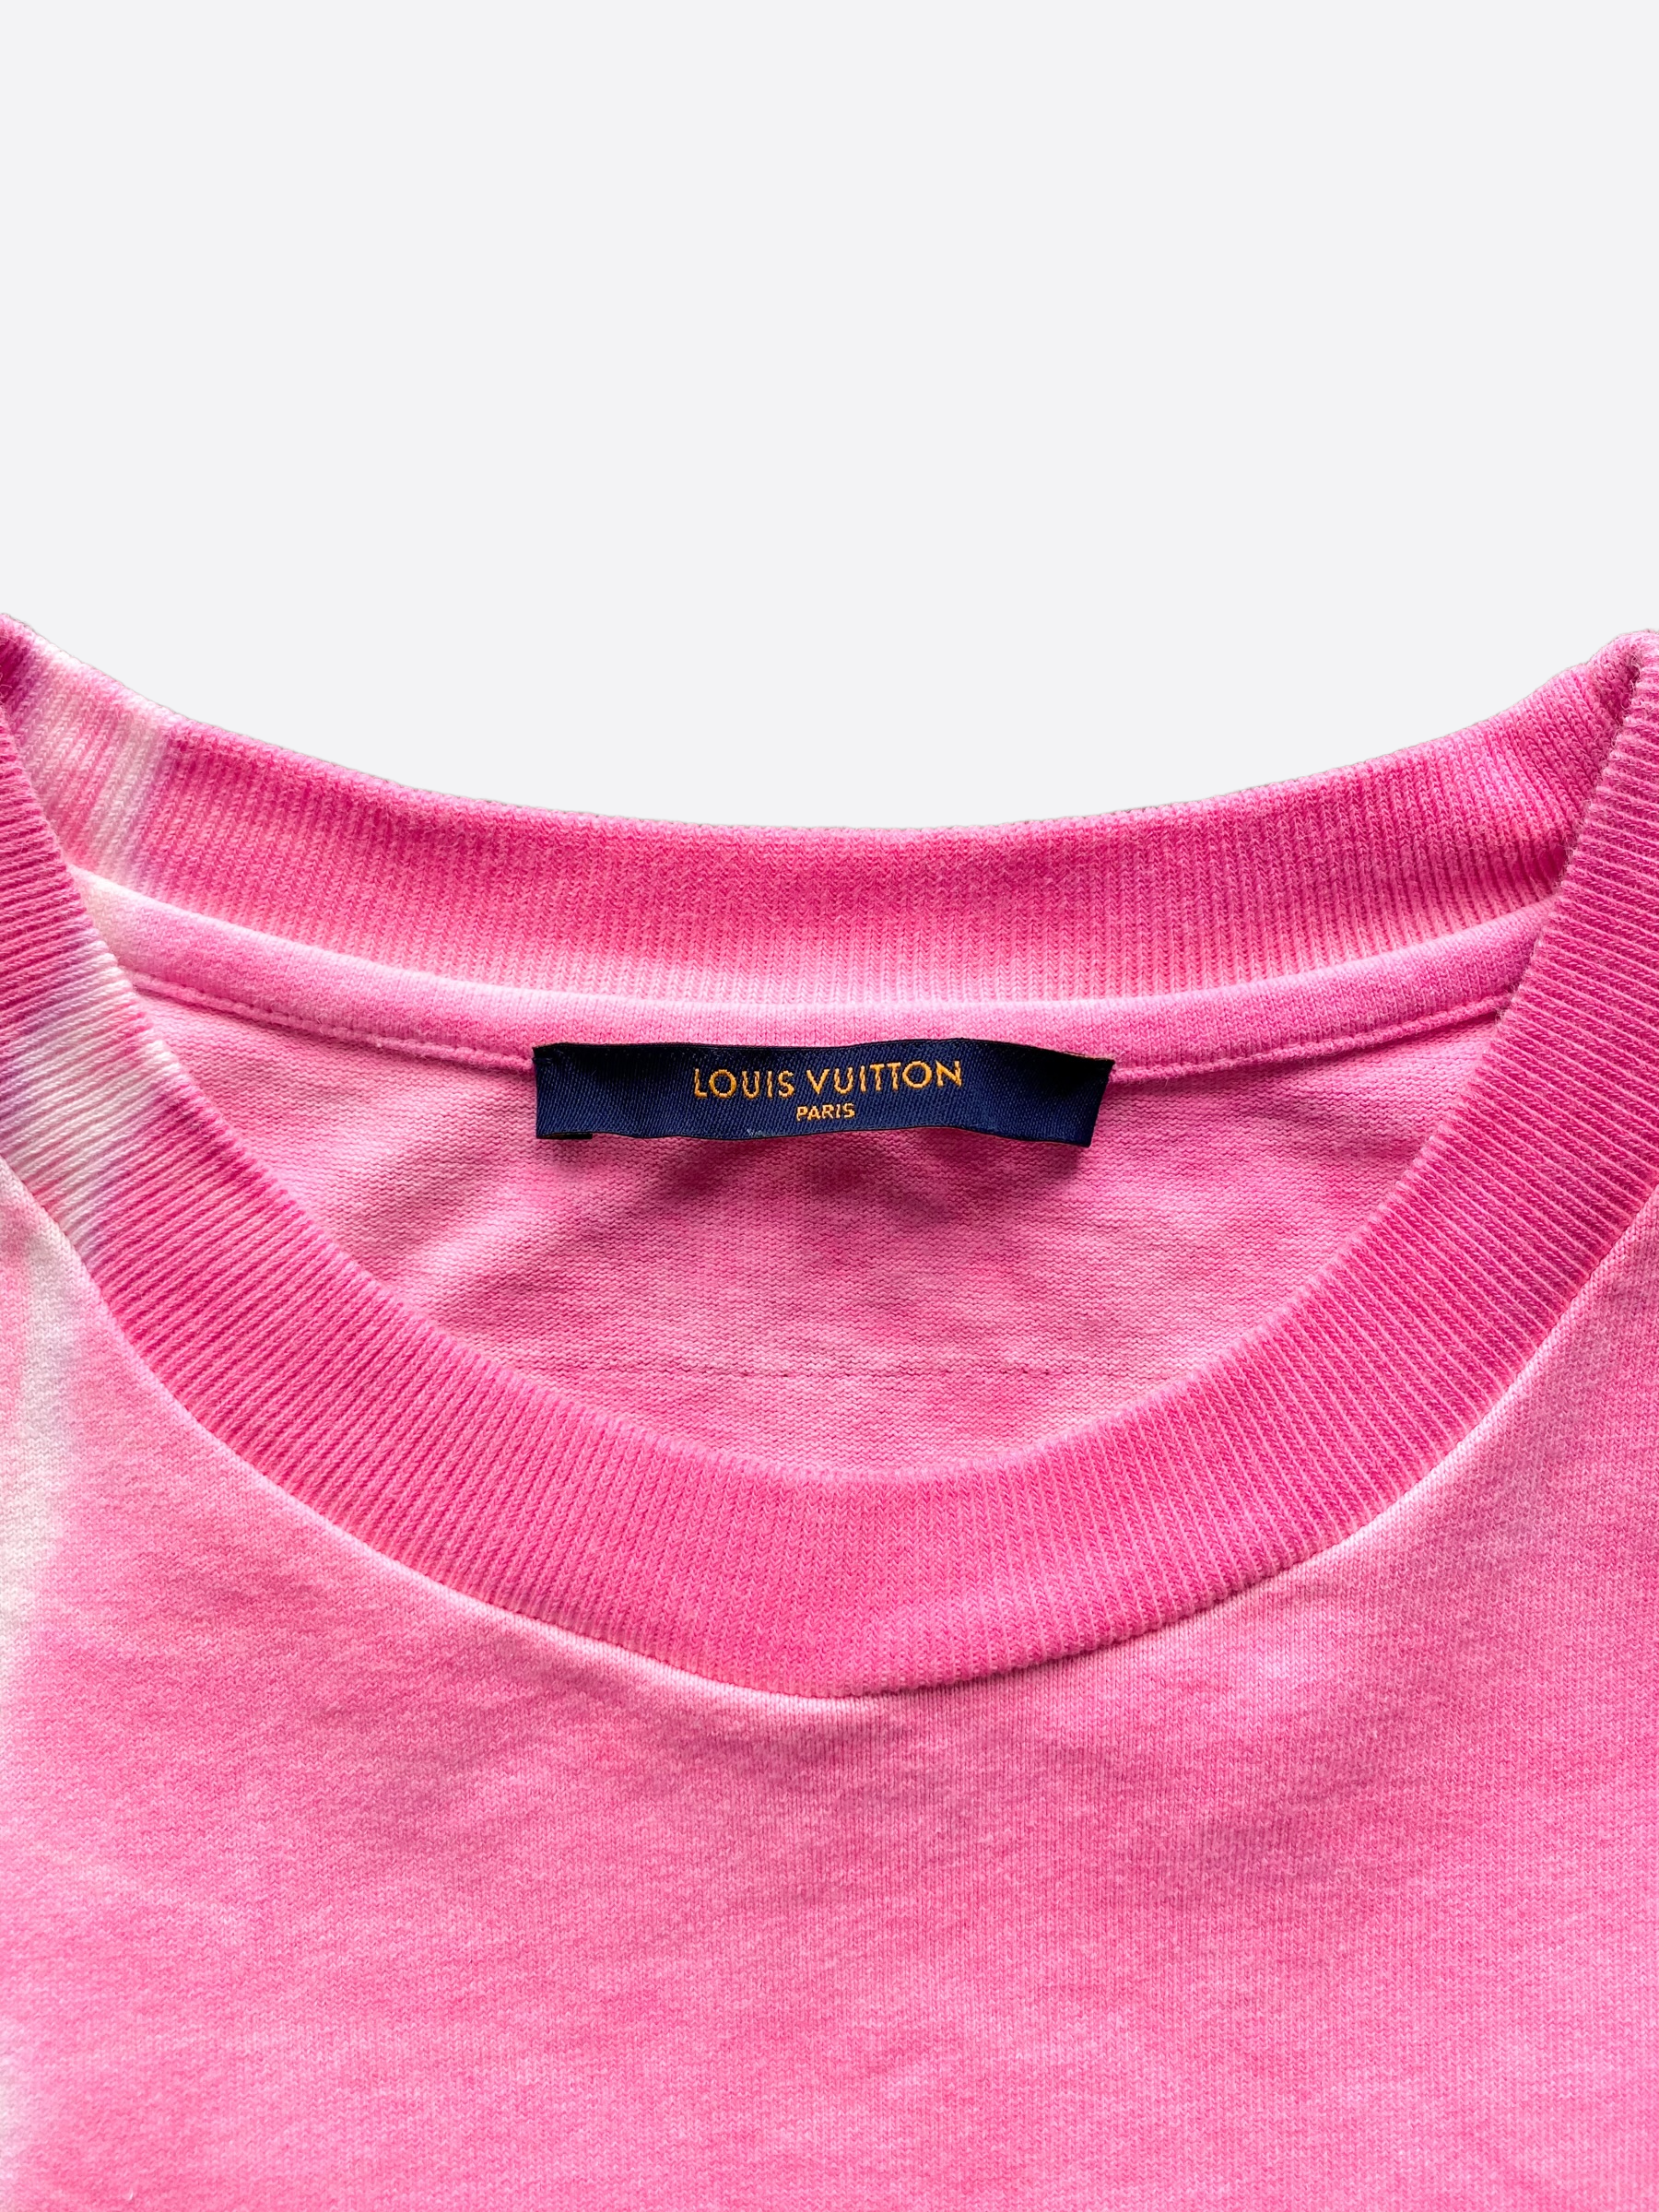 Louis Vuitton, Shirts, Louis Vuitton Tie Dye Tshirt